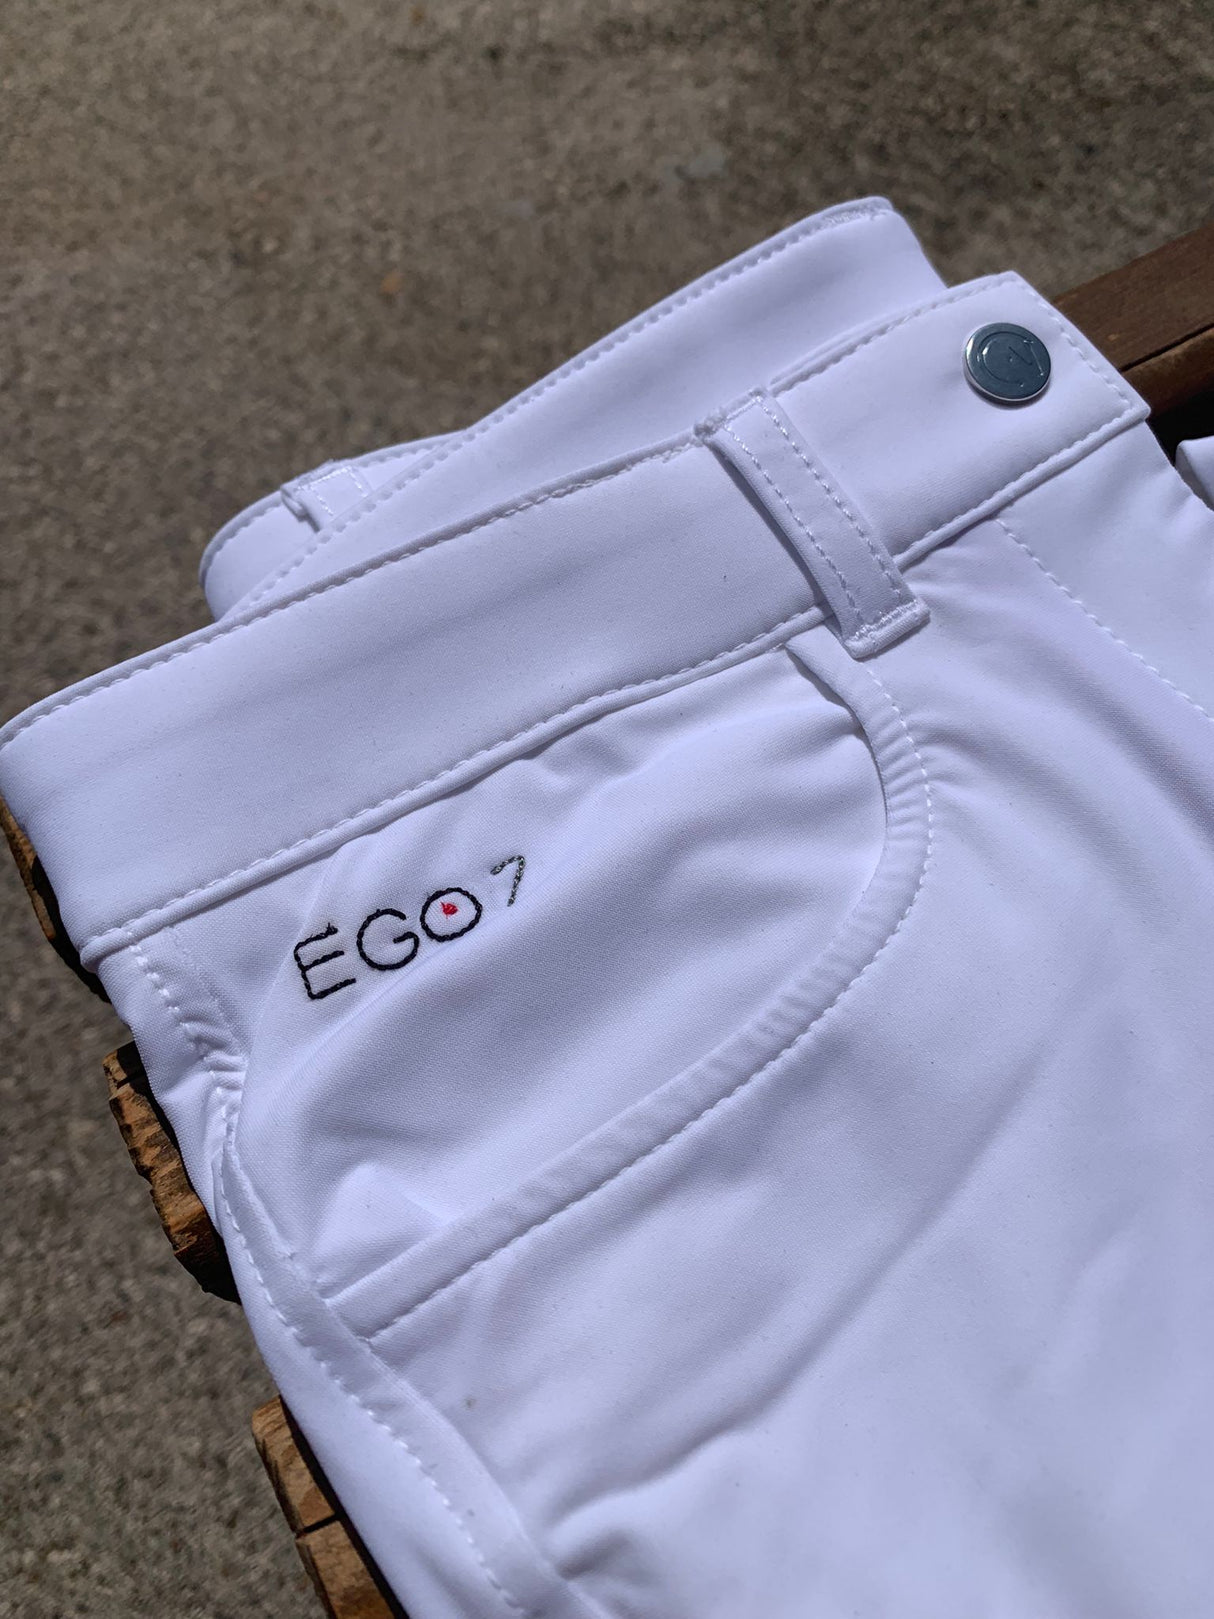 Pantalone Jumping Ego7 Bambino modello EJ-KI Junior Bianco